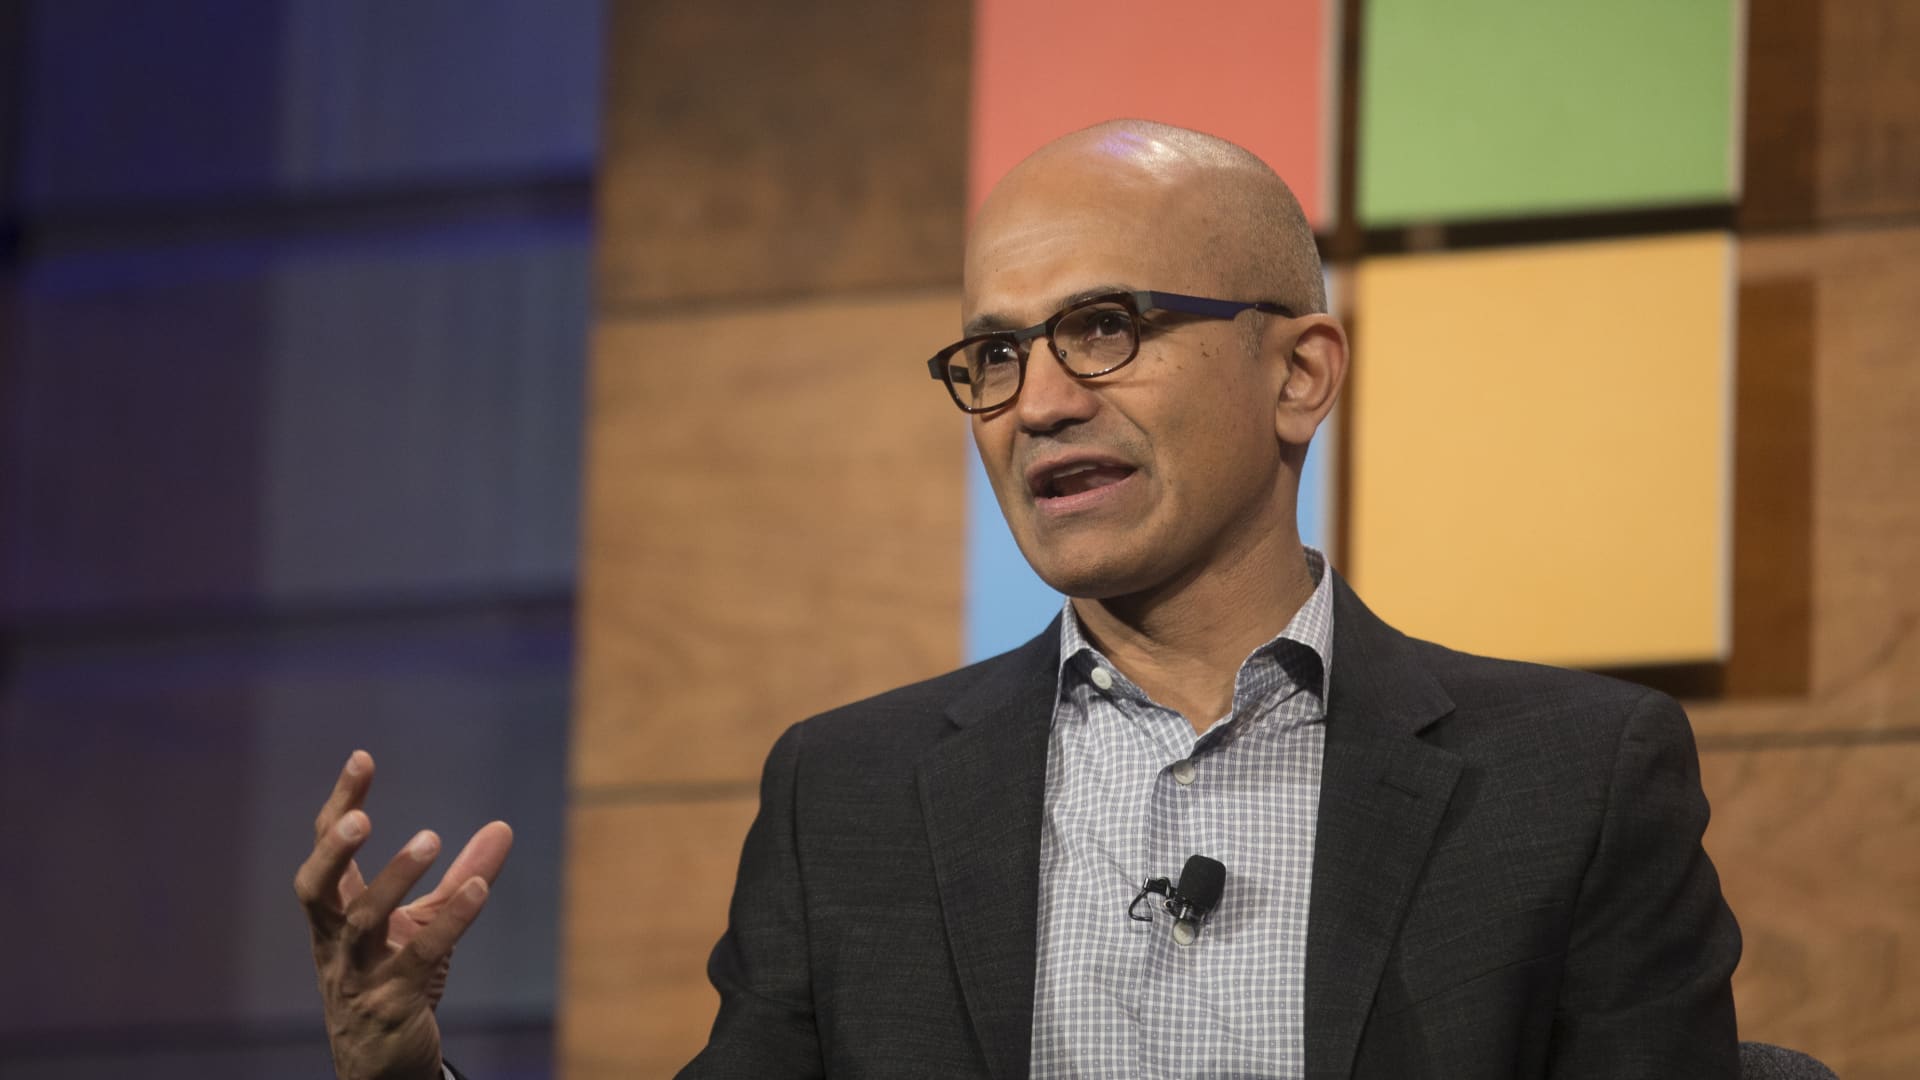 Microsoft stock sinks more than 8% on weak guidance